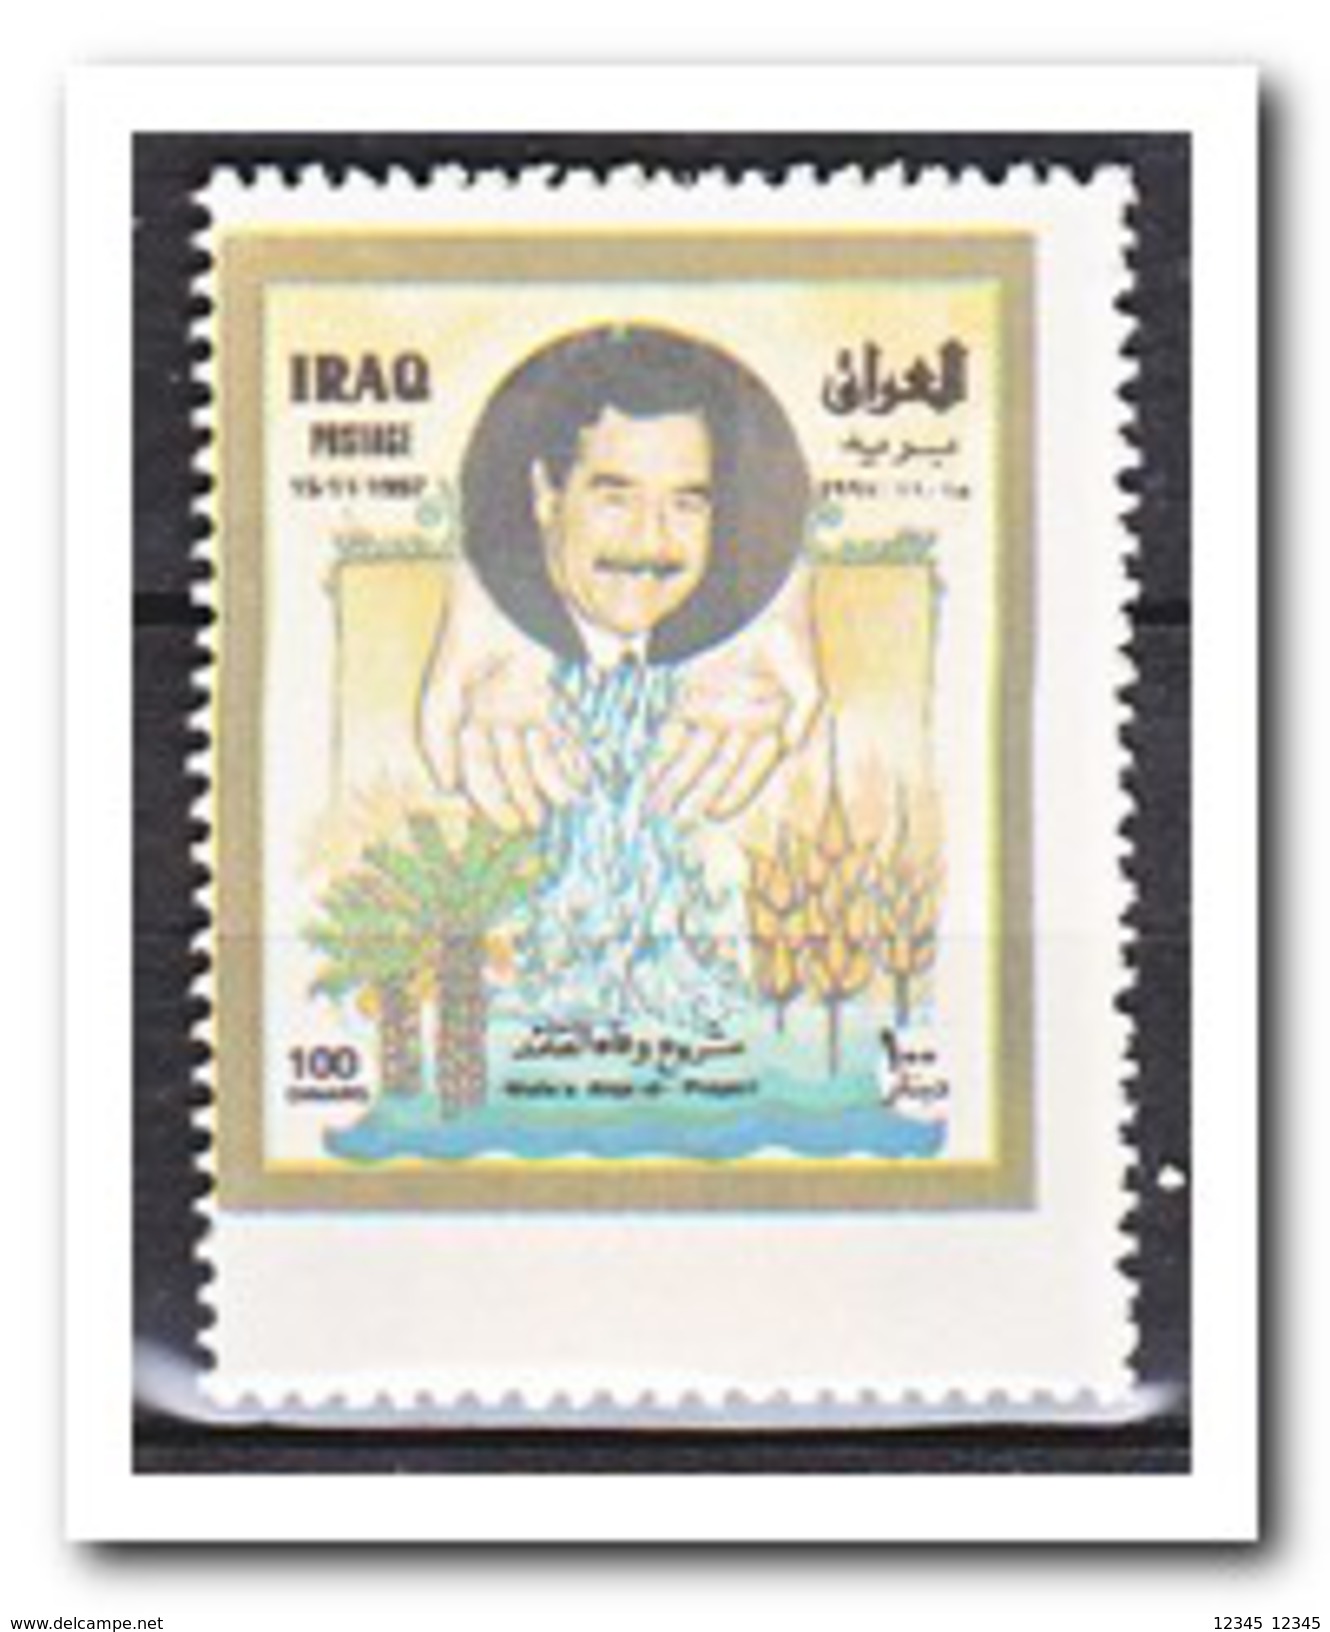 Irak 1997, Postfris MNH, Plants, Saddam Hussein, Agriculture - Irak